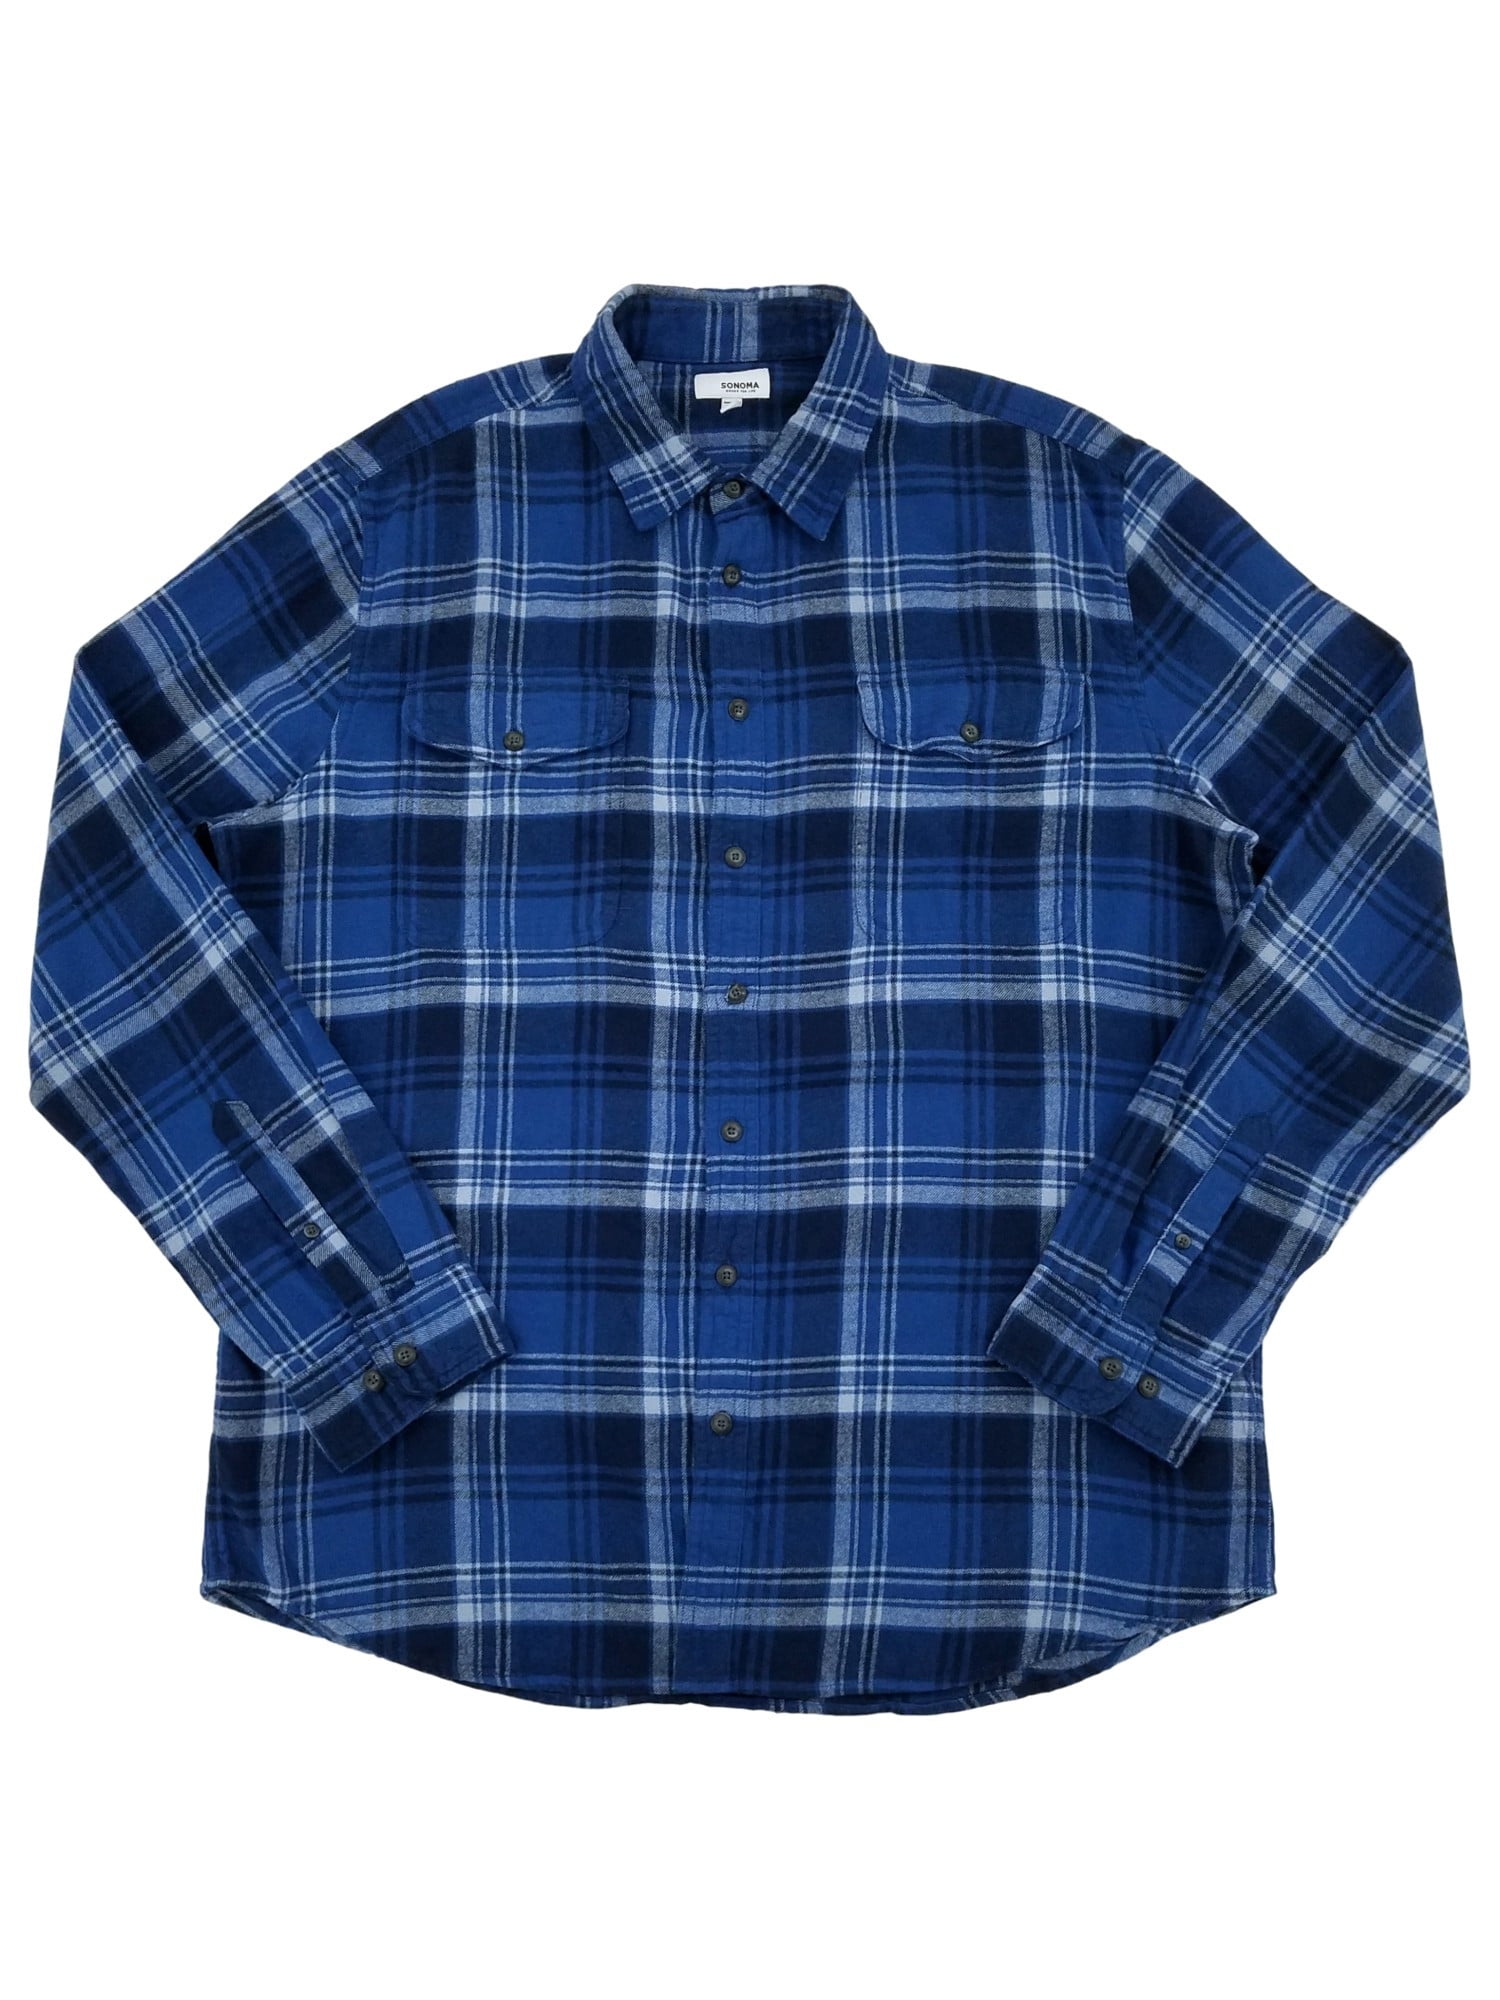 blue flannel shirt